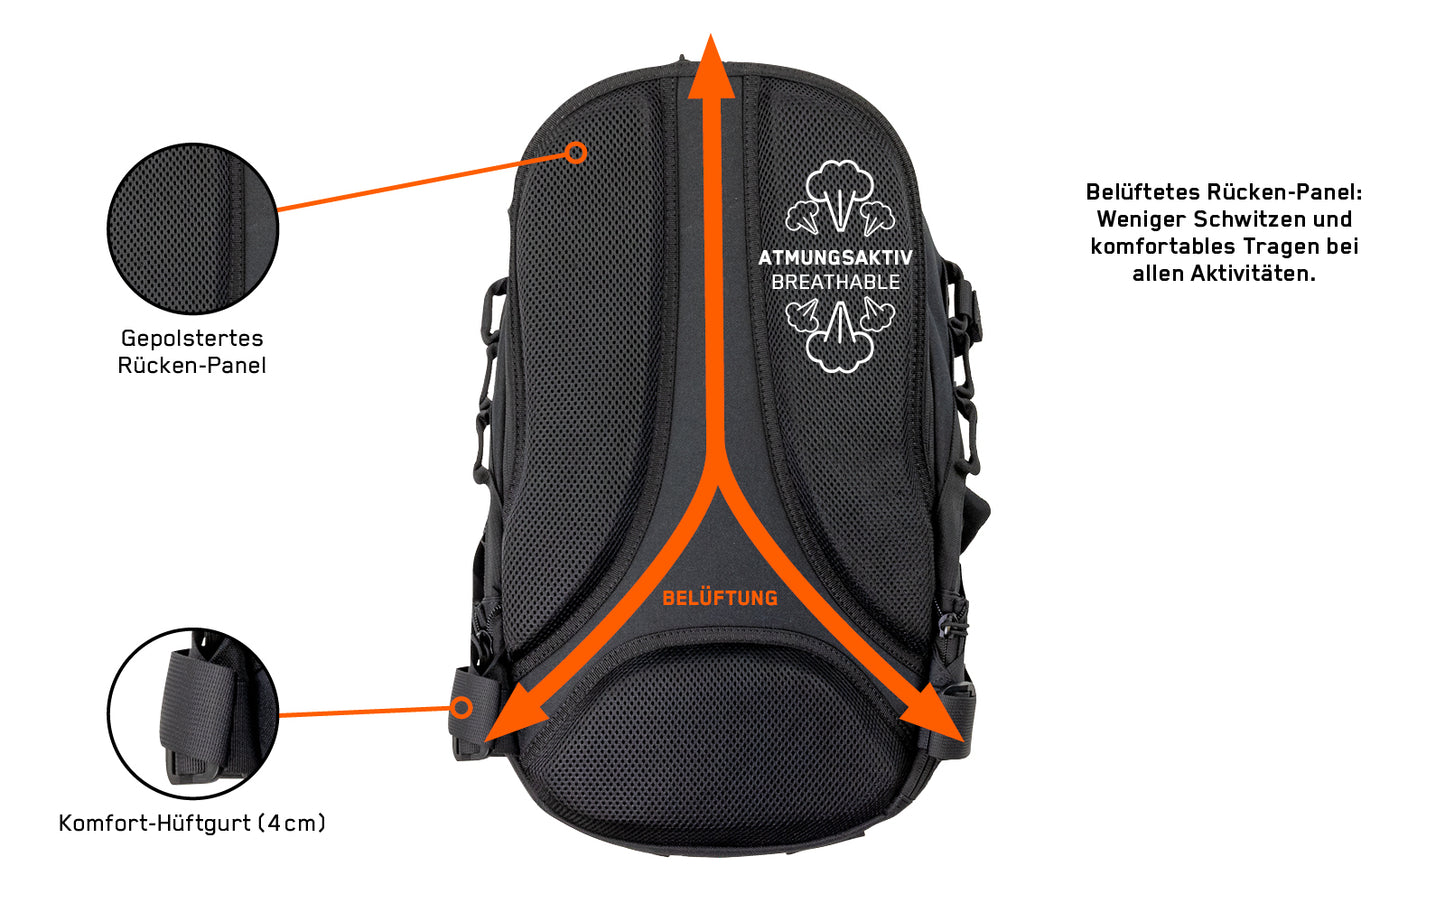 Detaillierte Beschreibung der Rückwand mit Bebilderung des Backpack One2explore.